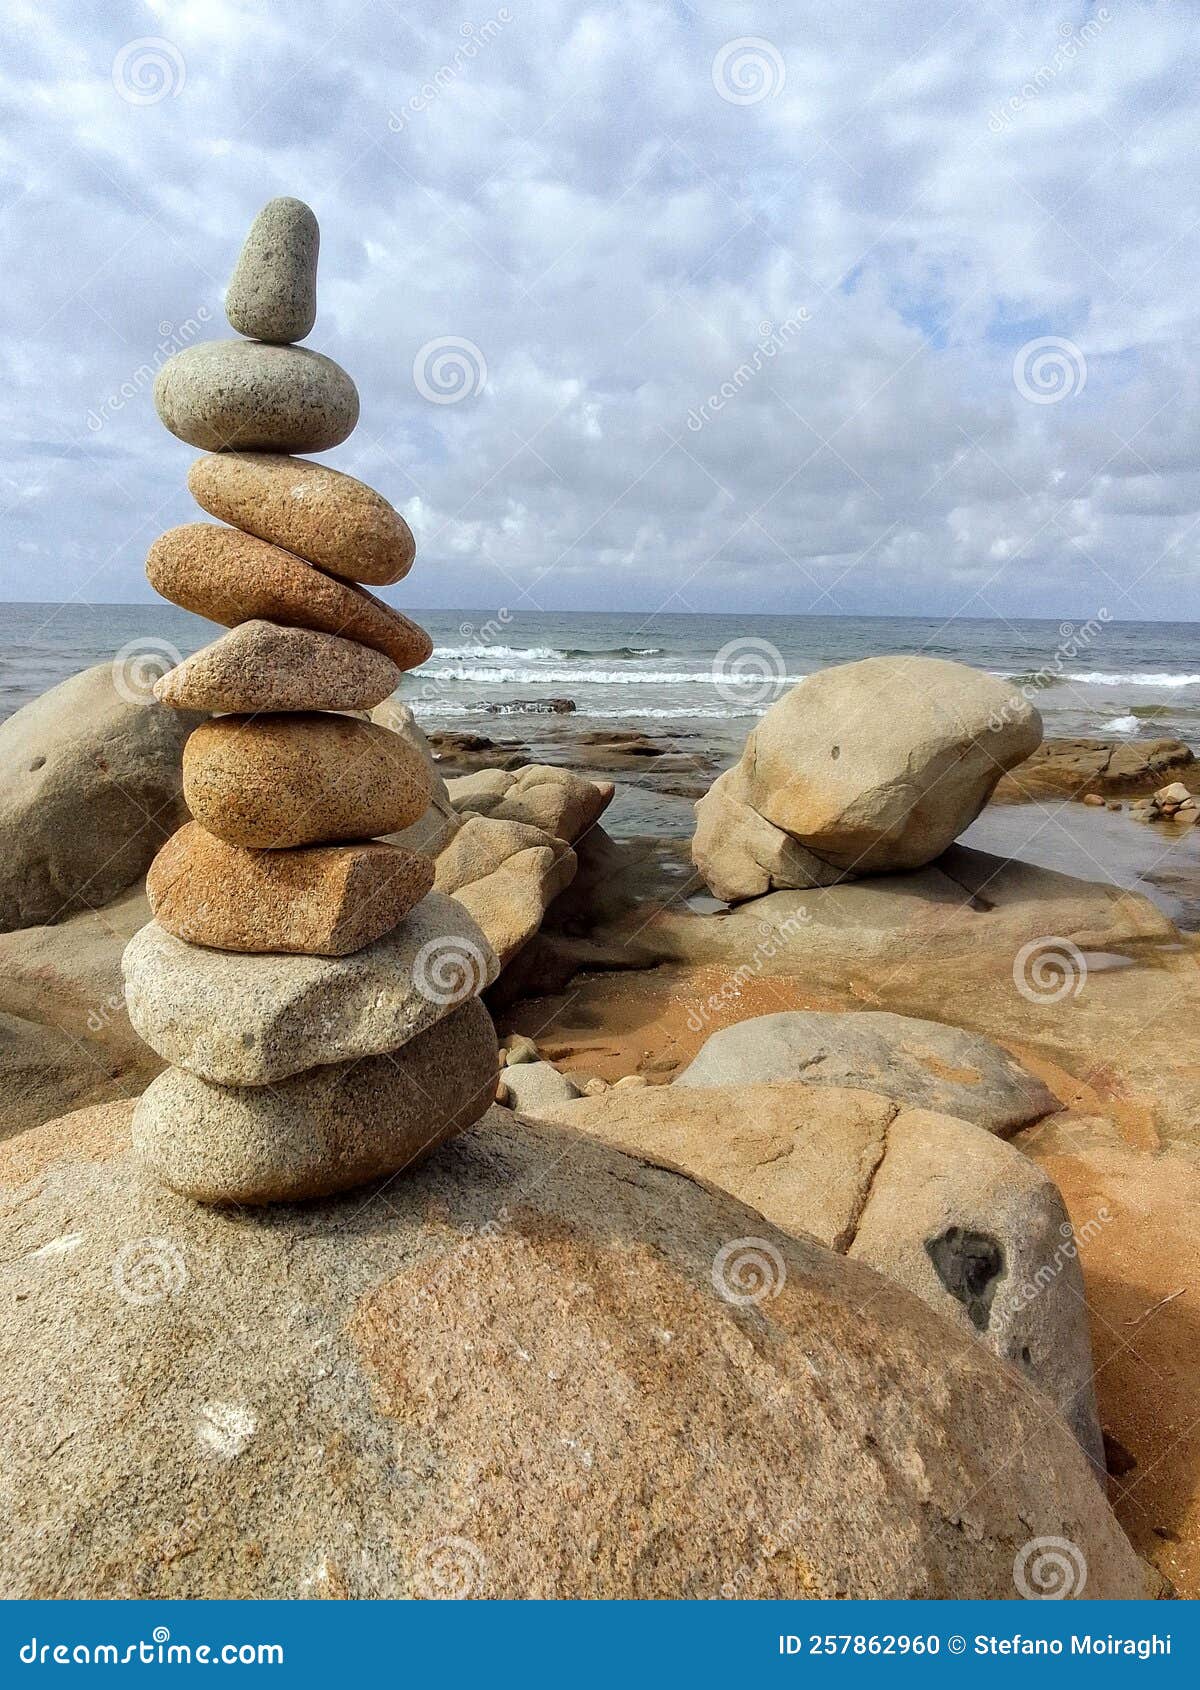 sardinia, italy stones composizione in front of sea